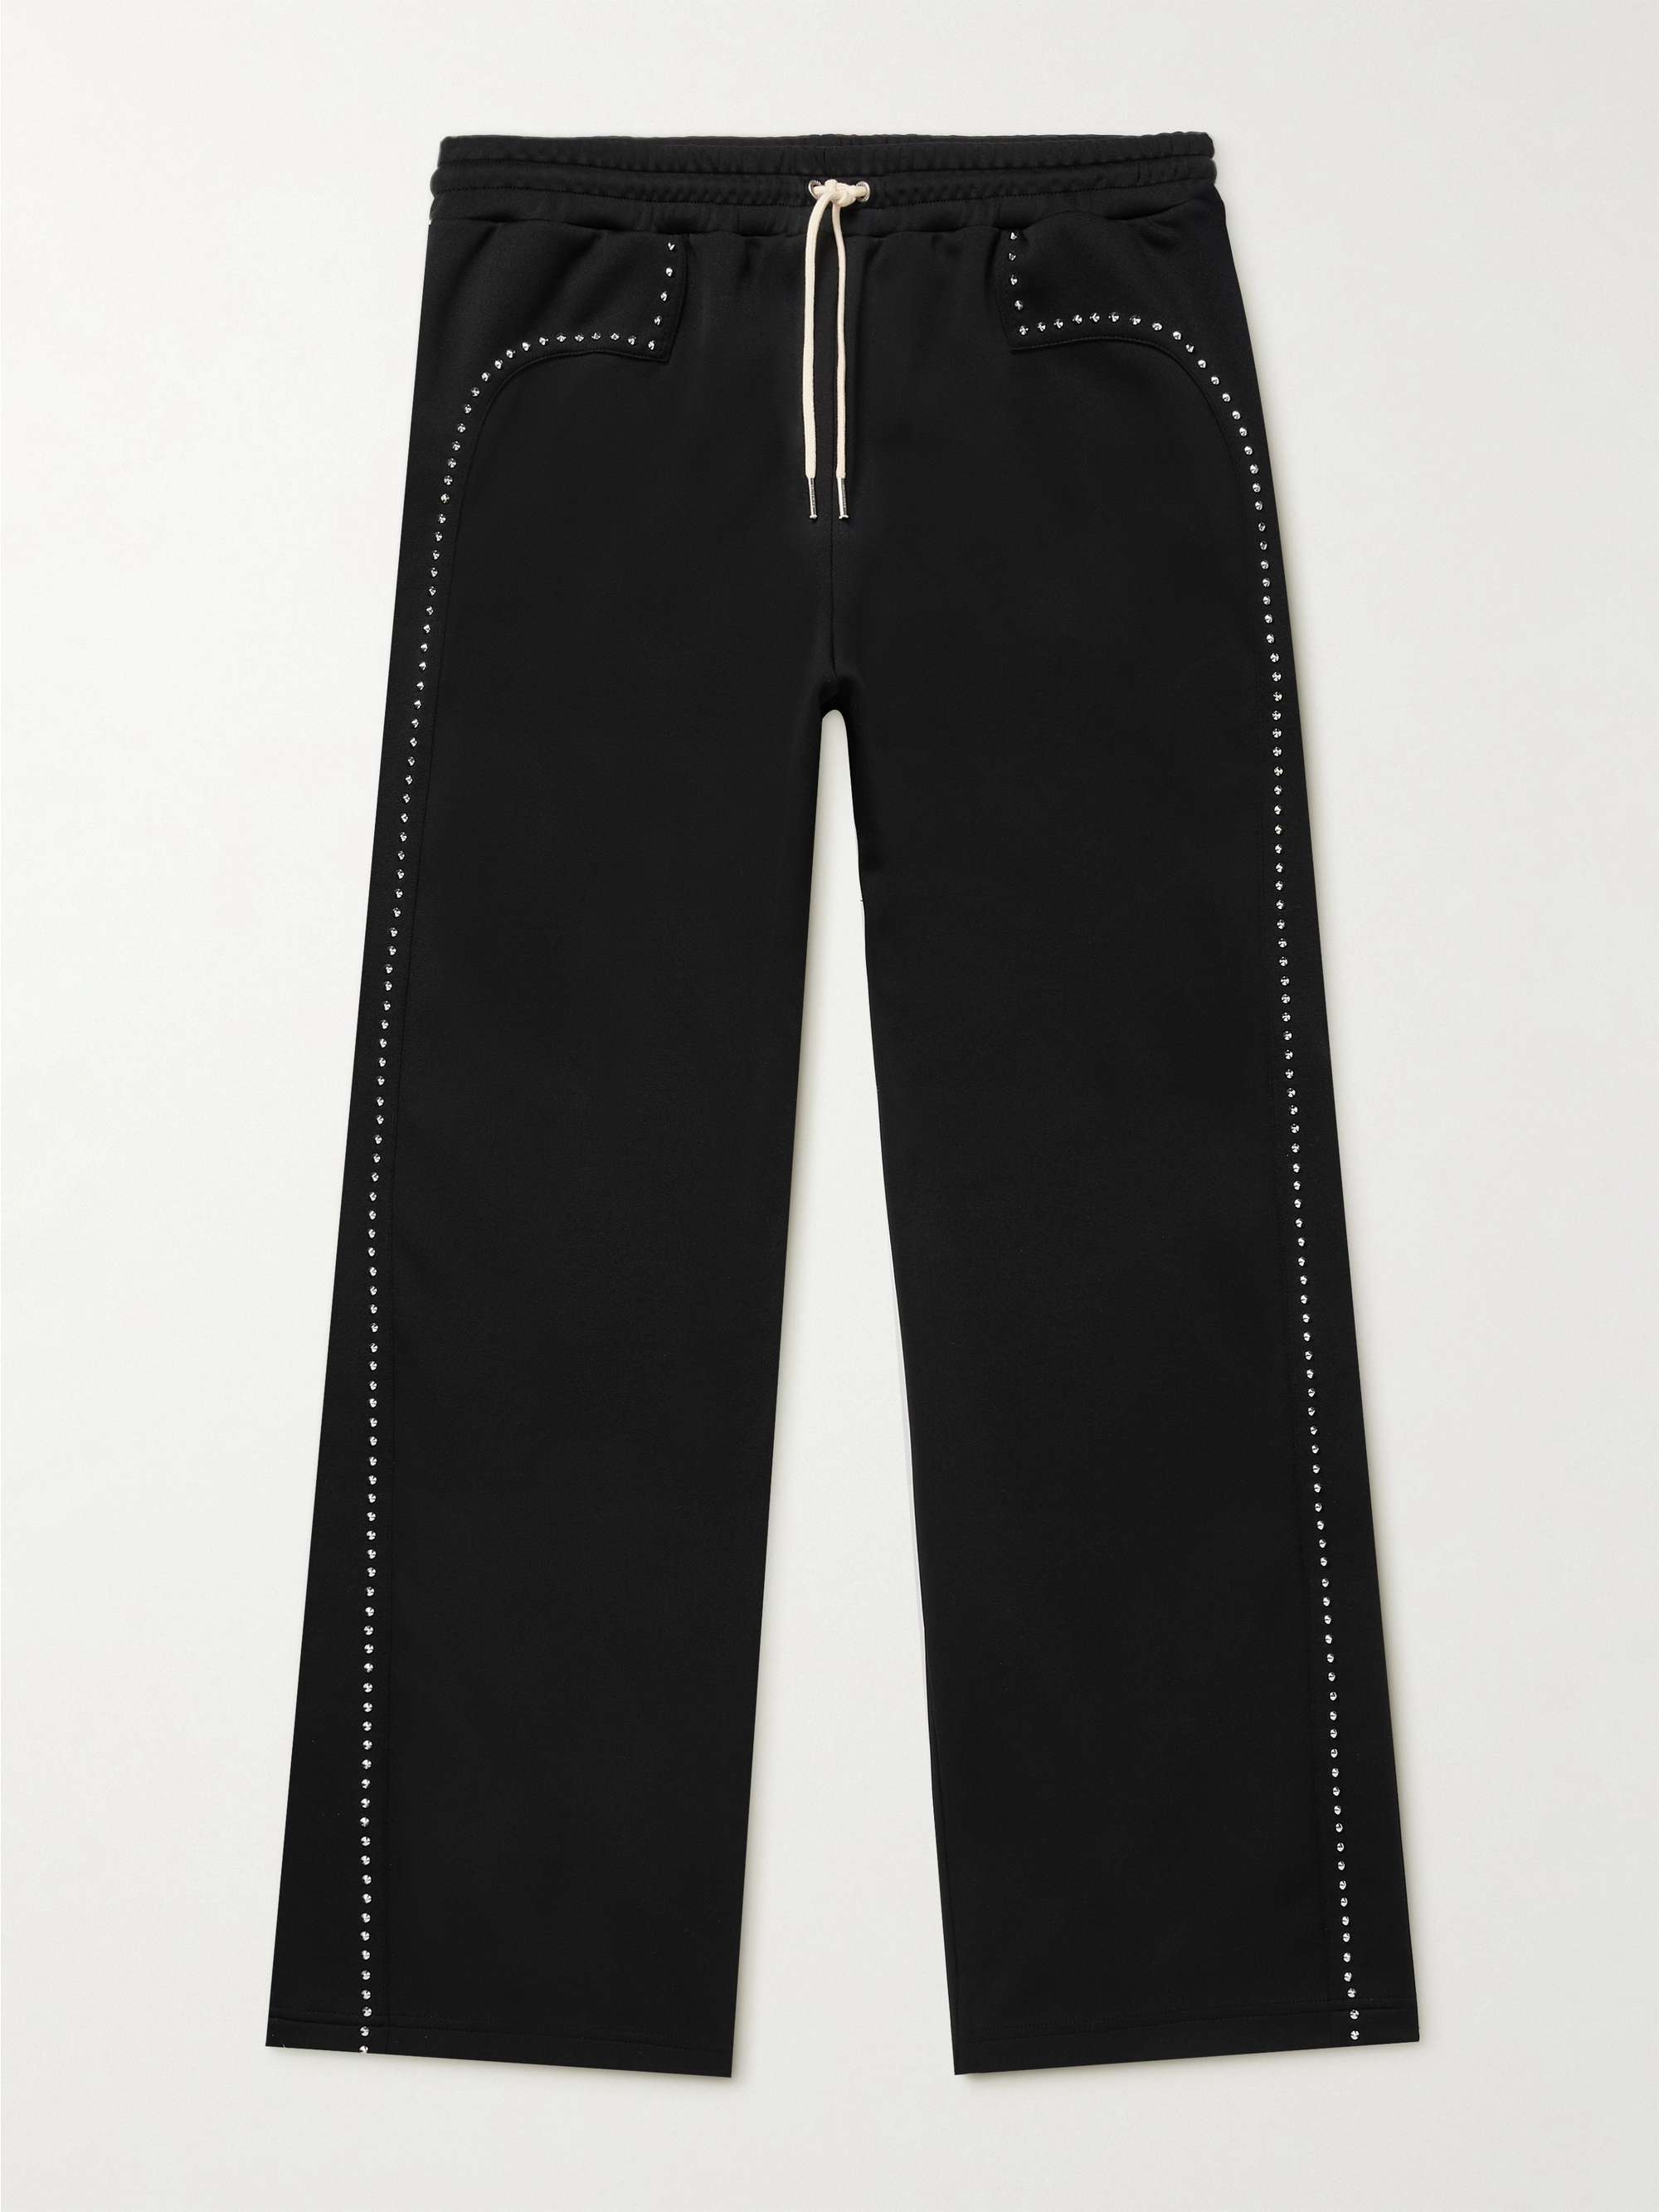 CELINE HOMME Straight-Leg Studded Jersey Sweatpants for Men | MR PORTER